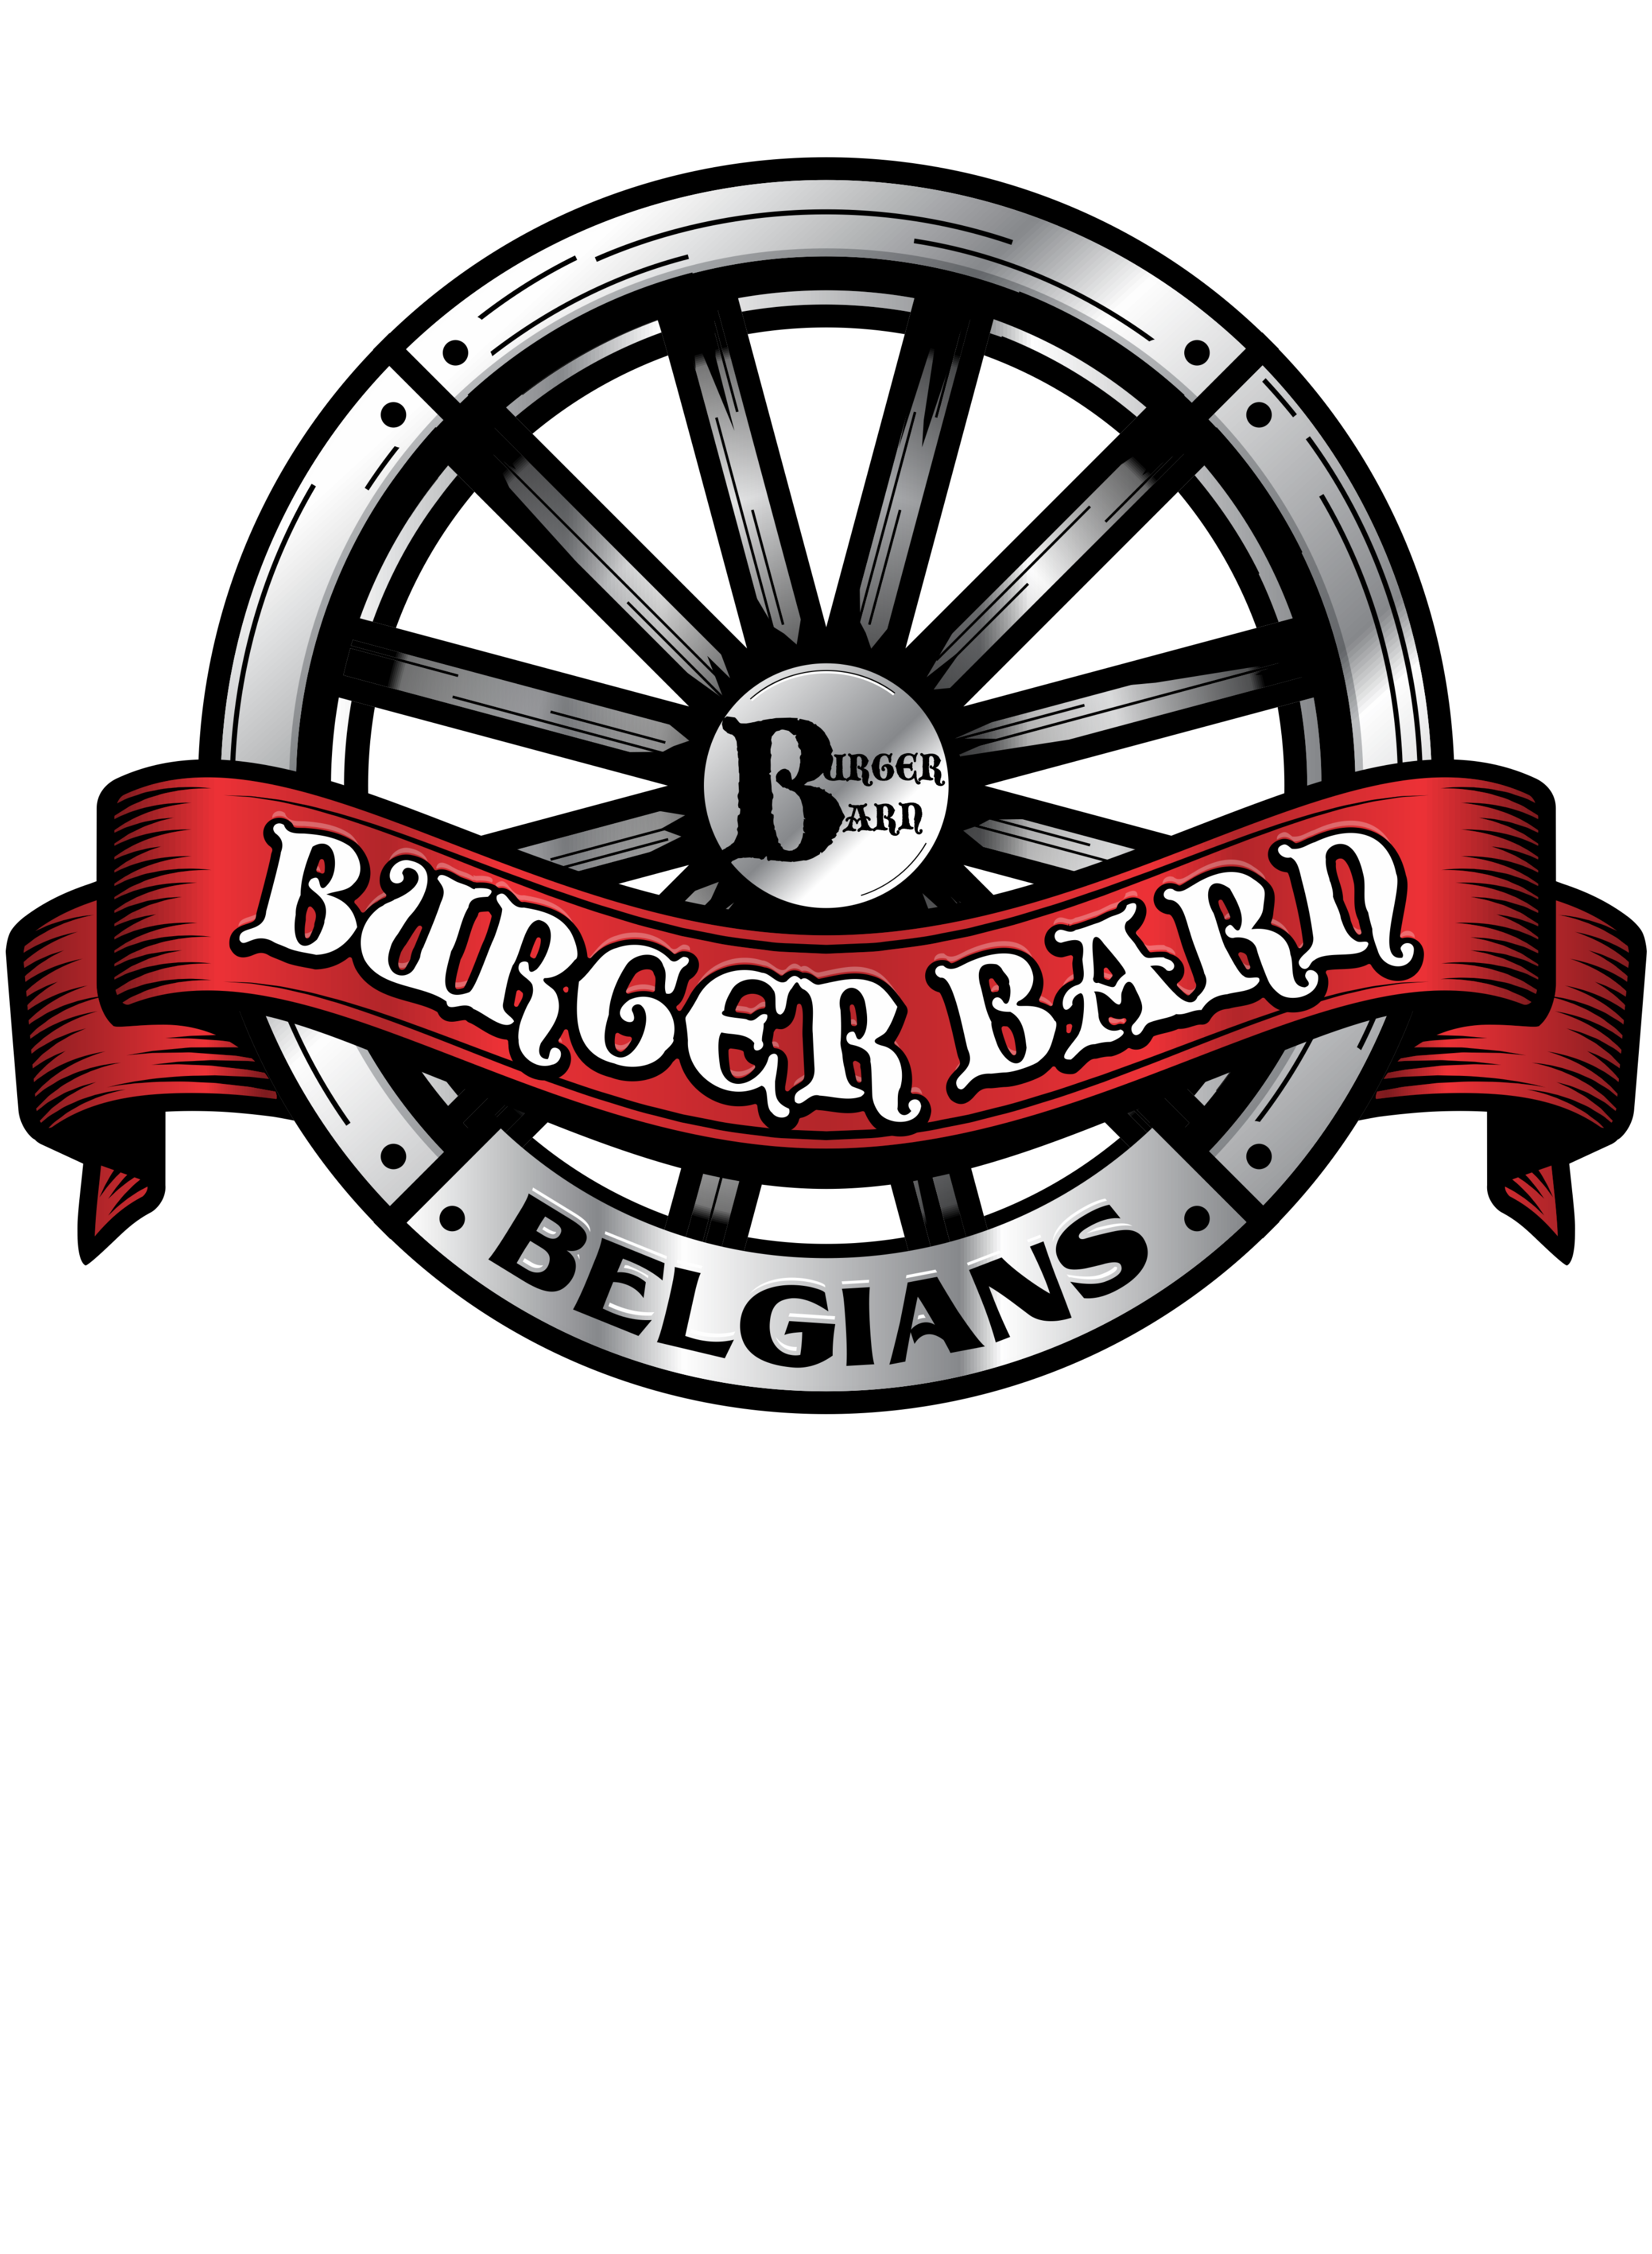 Burger Barn Belgians Crew neck sweater 2XL-4XL